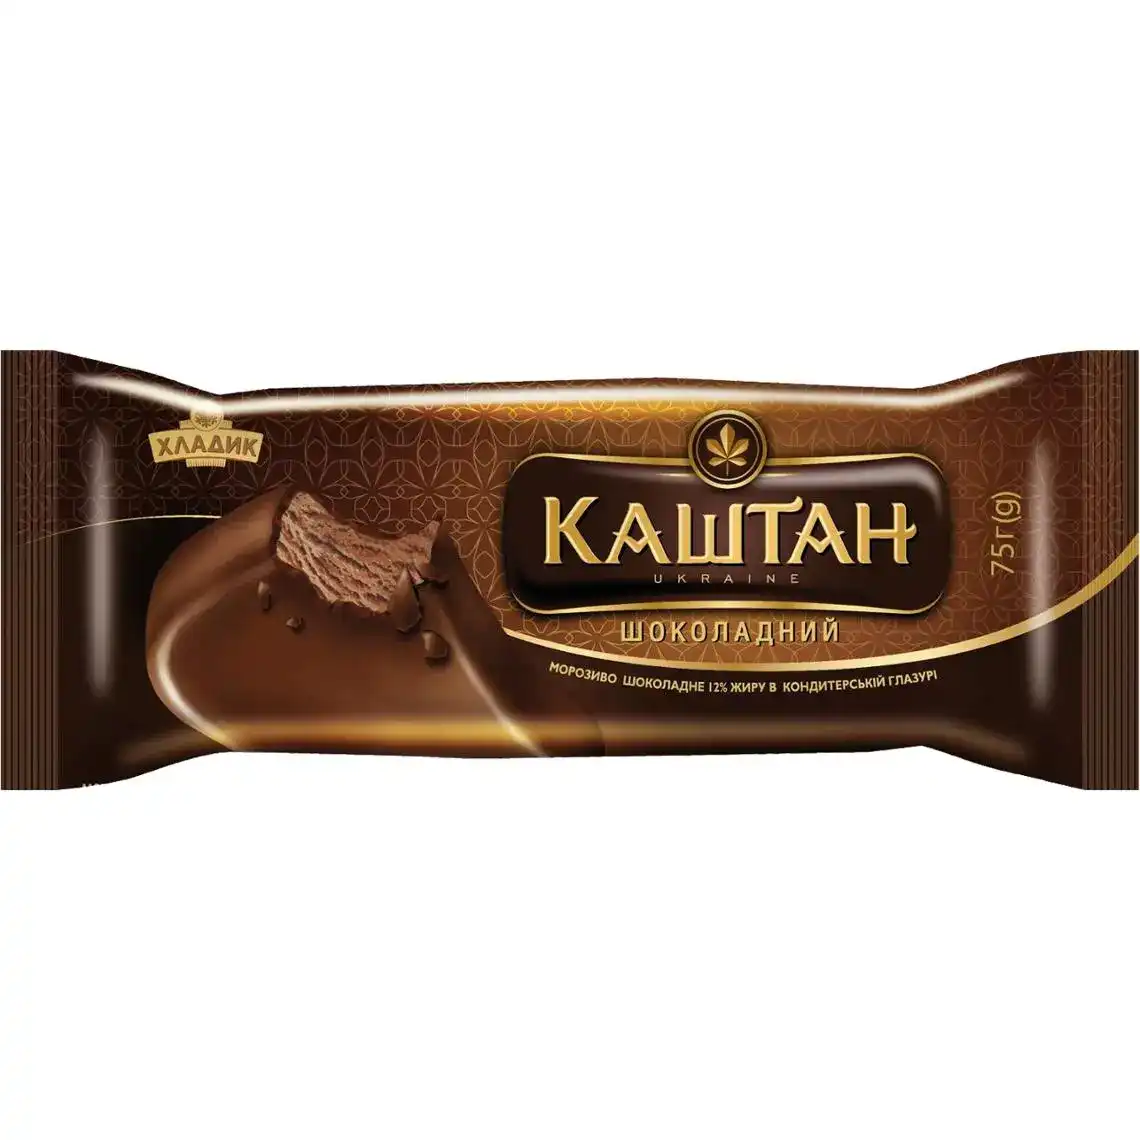 Мороженое Хладик Каштан пломбир 12% шоколадное в глазури 75 г